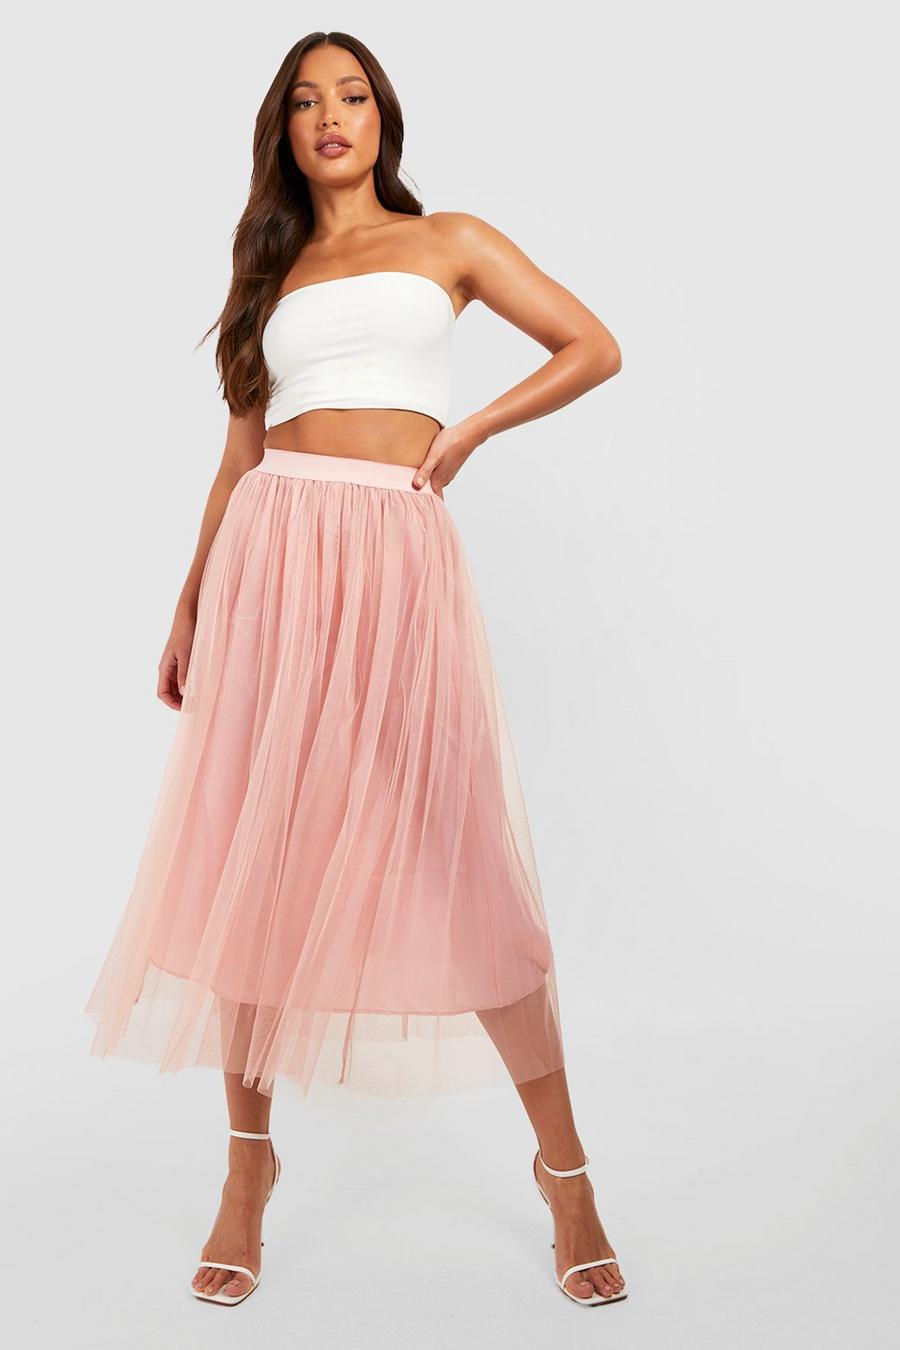 Blush pink Tall Boutique Tulle Mesh Midi Skirt